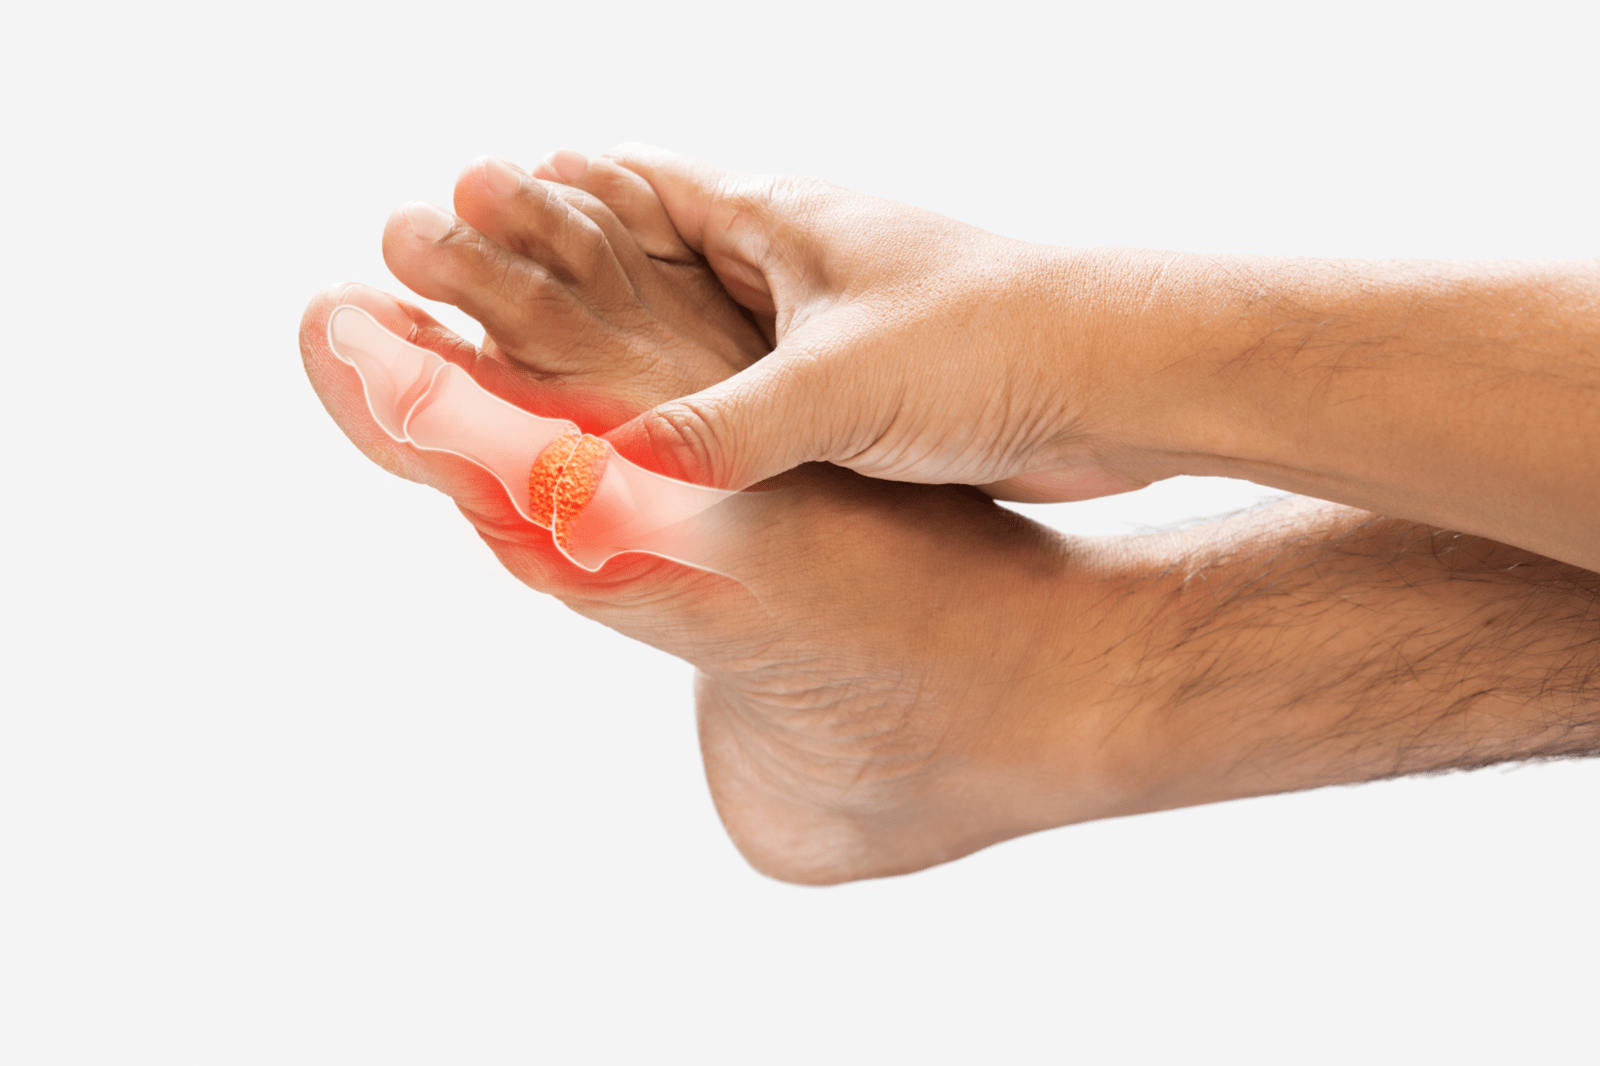 Alliance Orthopedics’ Approach To Inflammatory Arthritis: Minimizing Pain, Maximizing Mobility